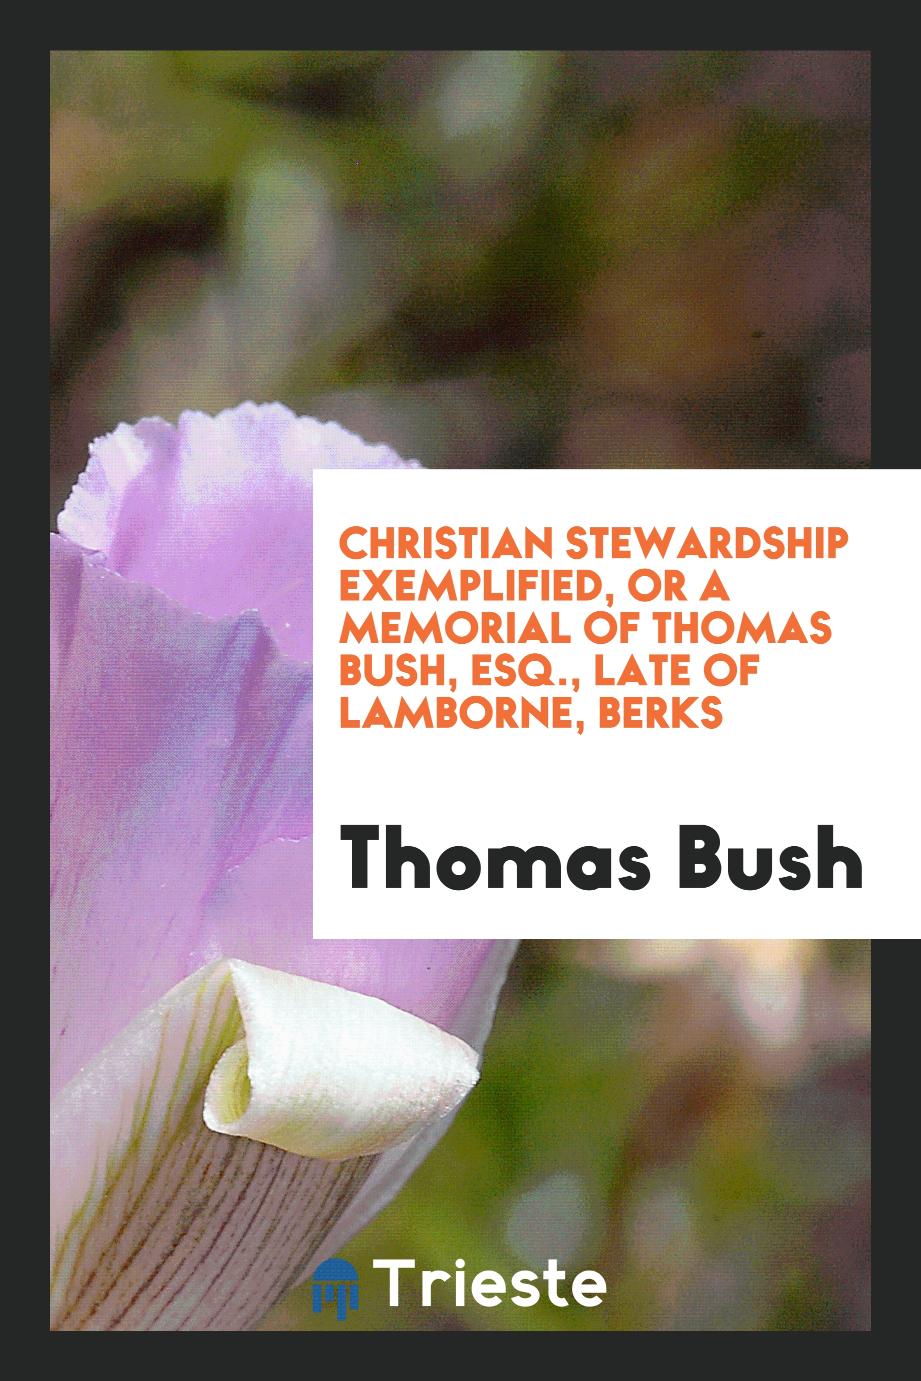 Christian Stewardship Exemplified, or A Memorial of Thomas Bush, Esq., Late of Lamborne, Berks